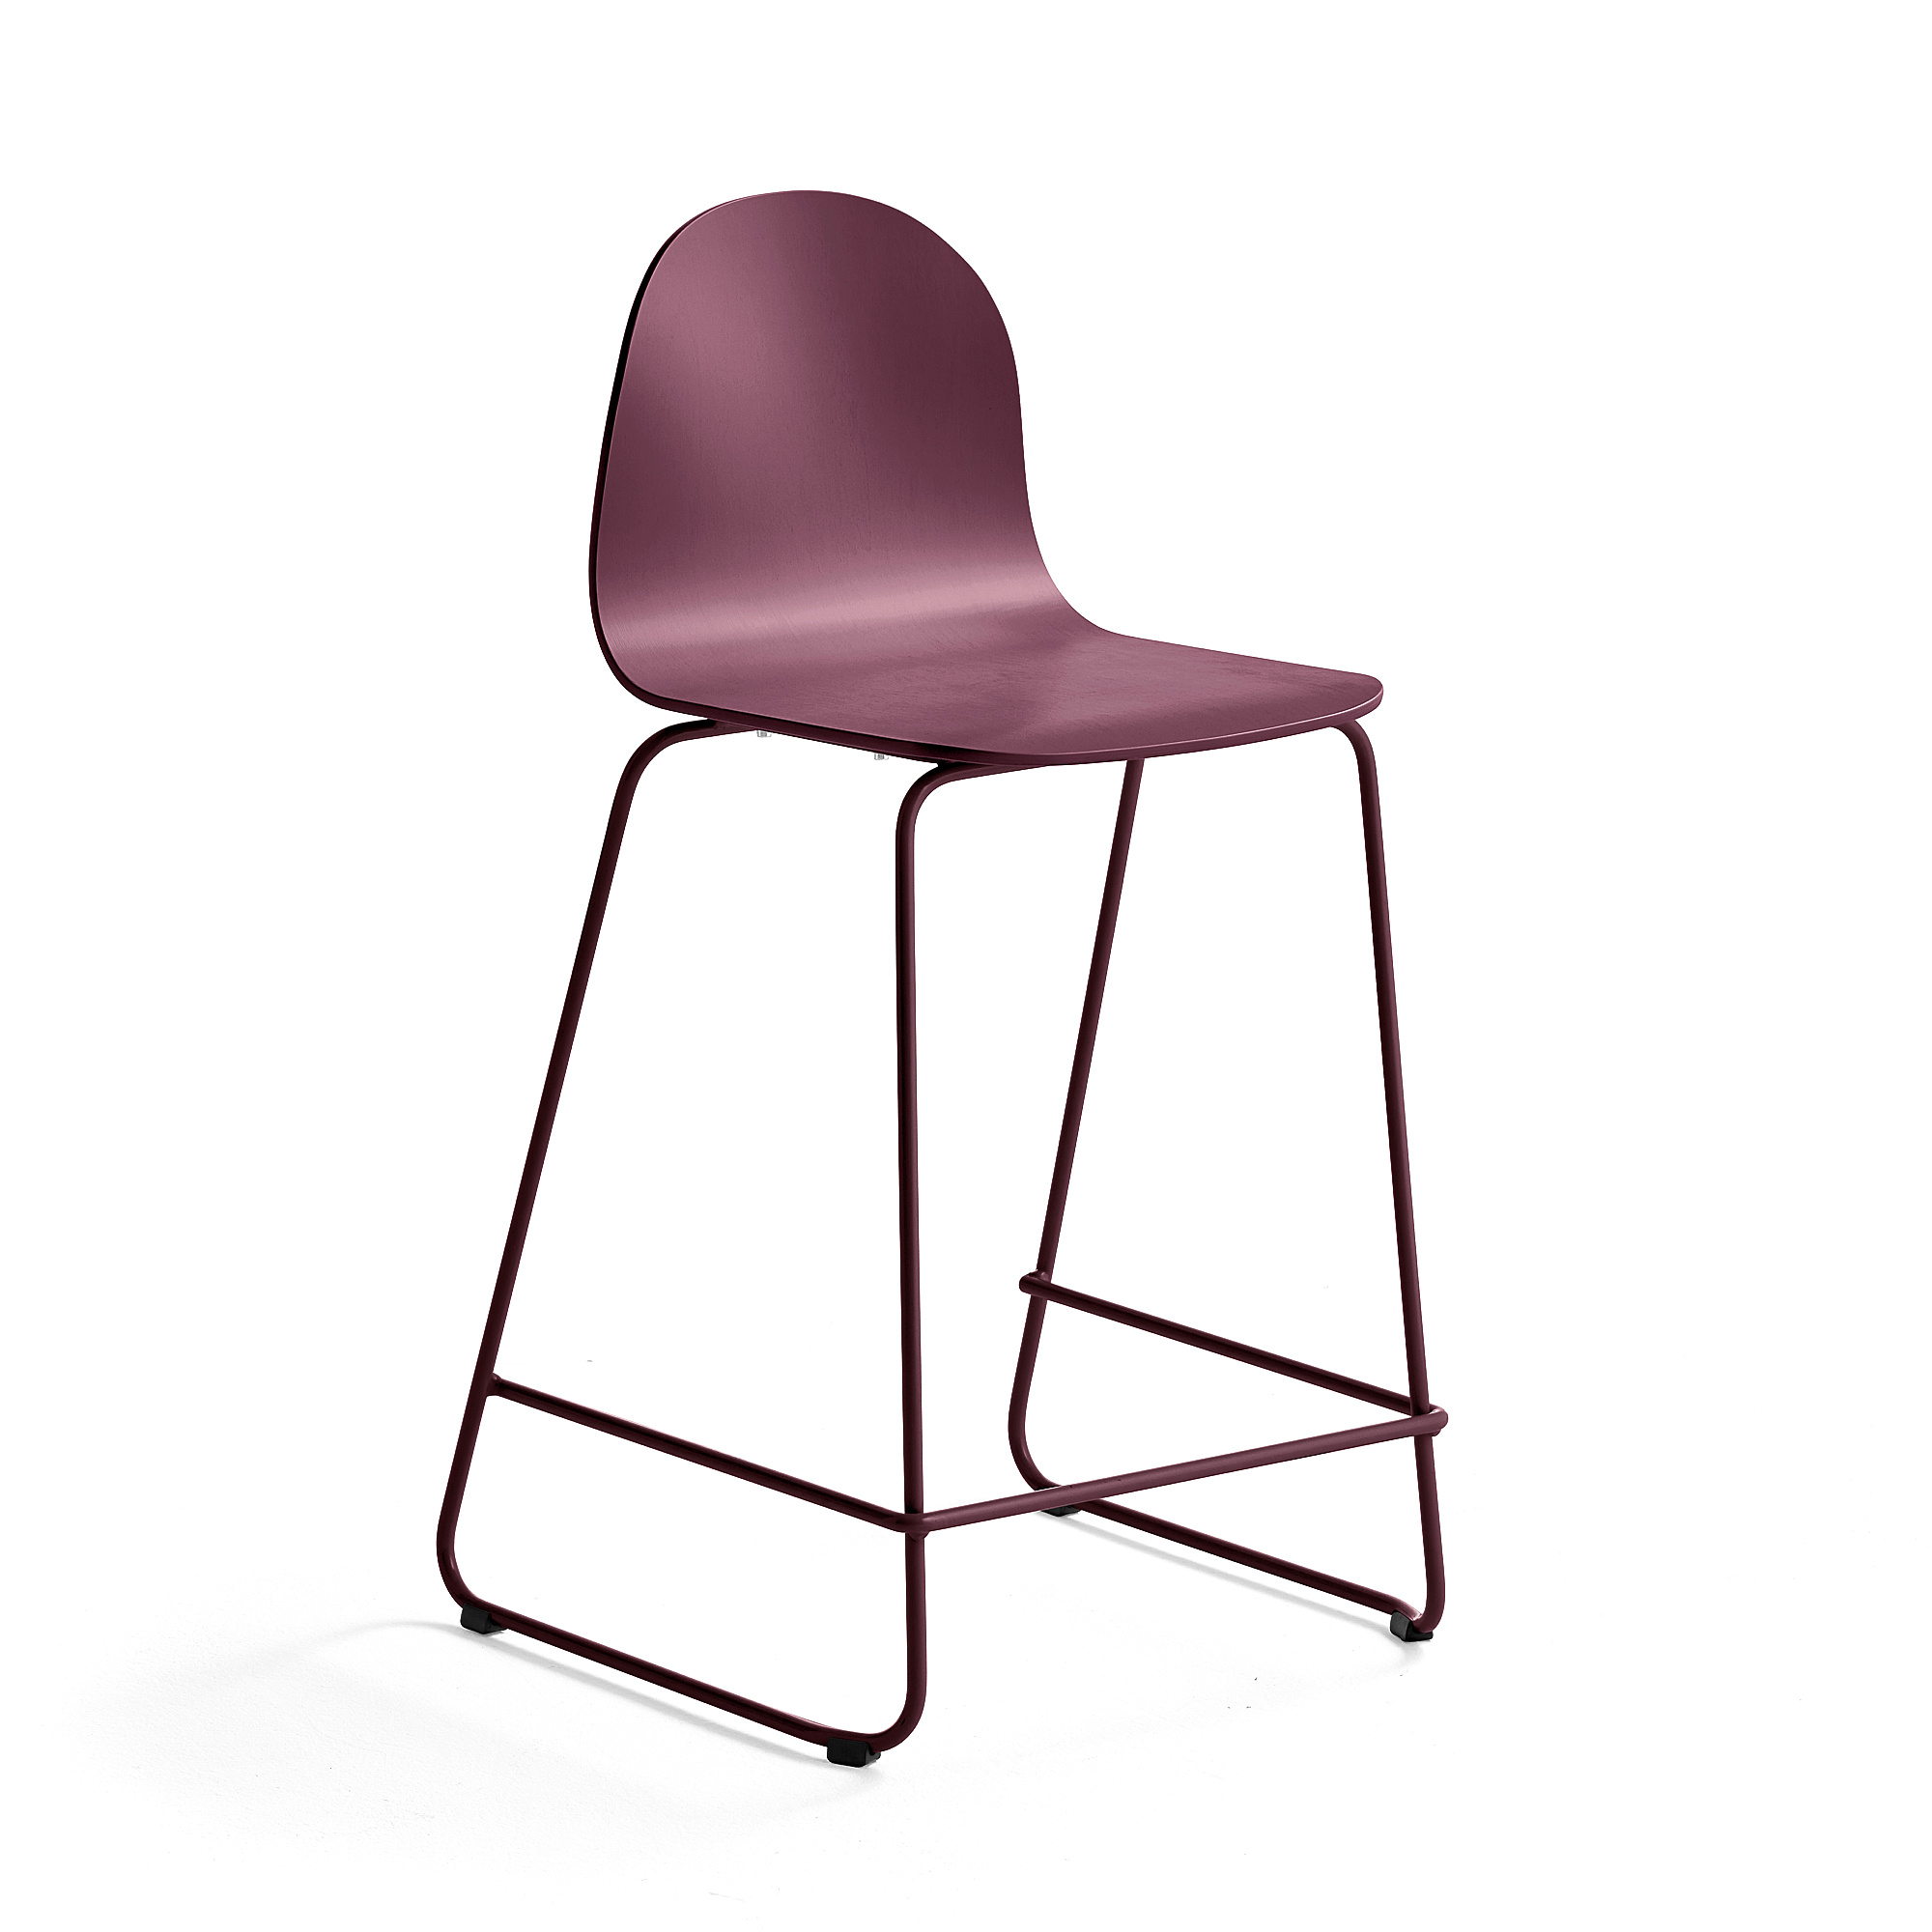 Barová stolička GANDER, s klzákmi, výška sedu 630 mm, lakovaná, červená